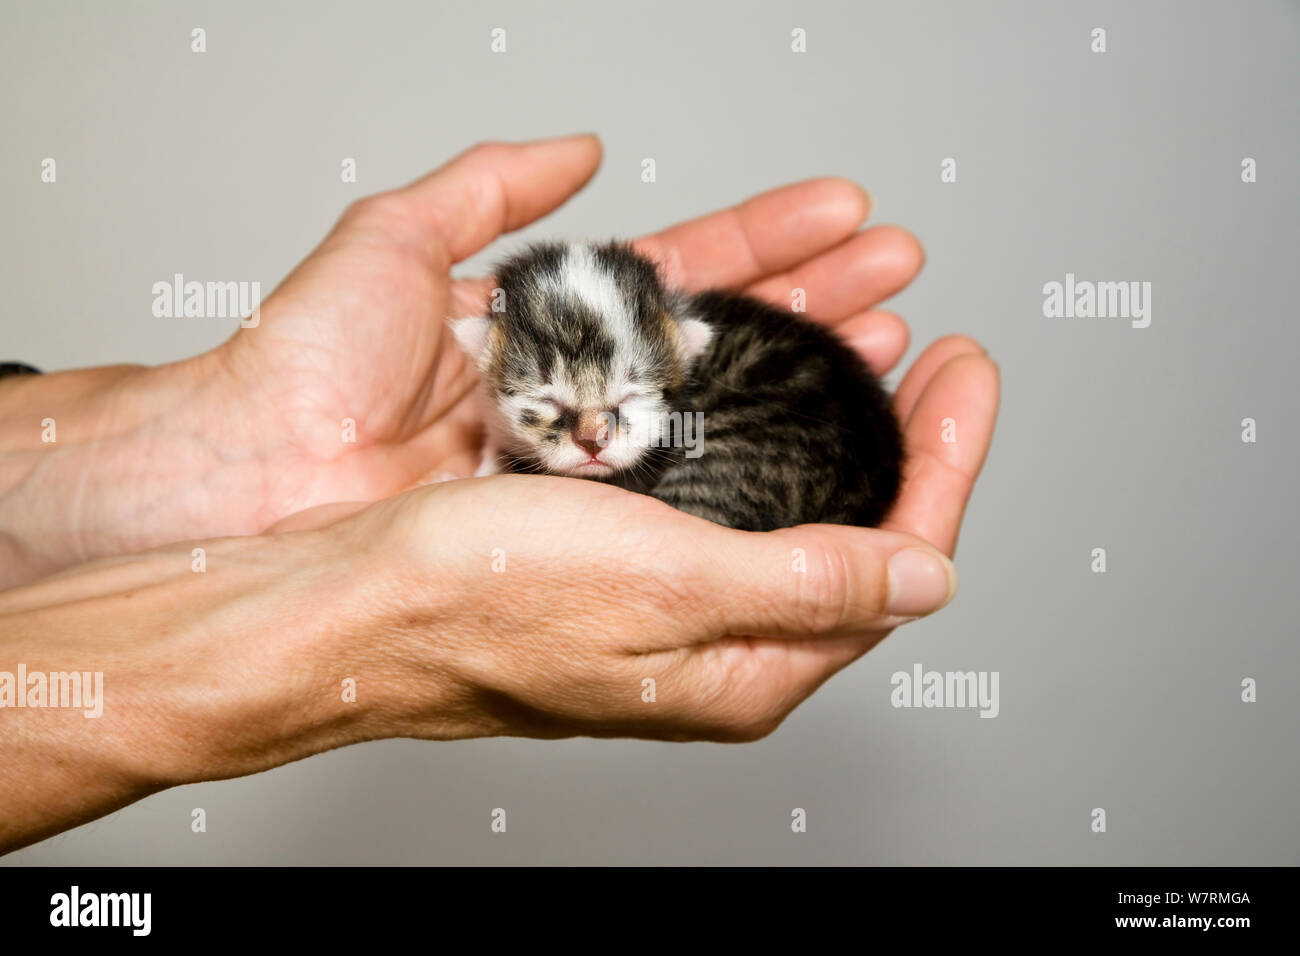 Tiny newborn kitten held in woman's hand, Germany Stock Photo